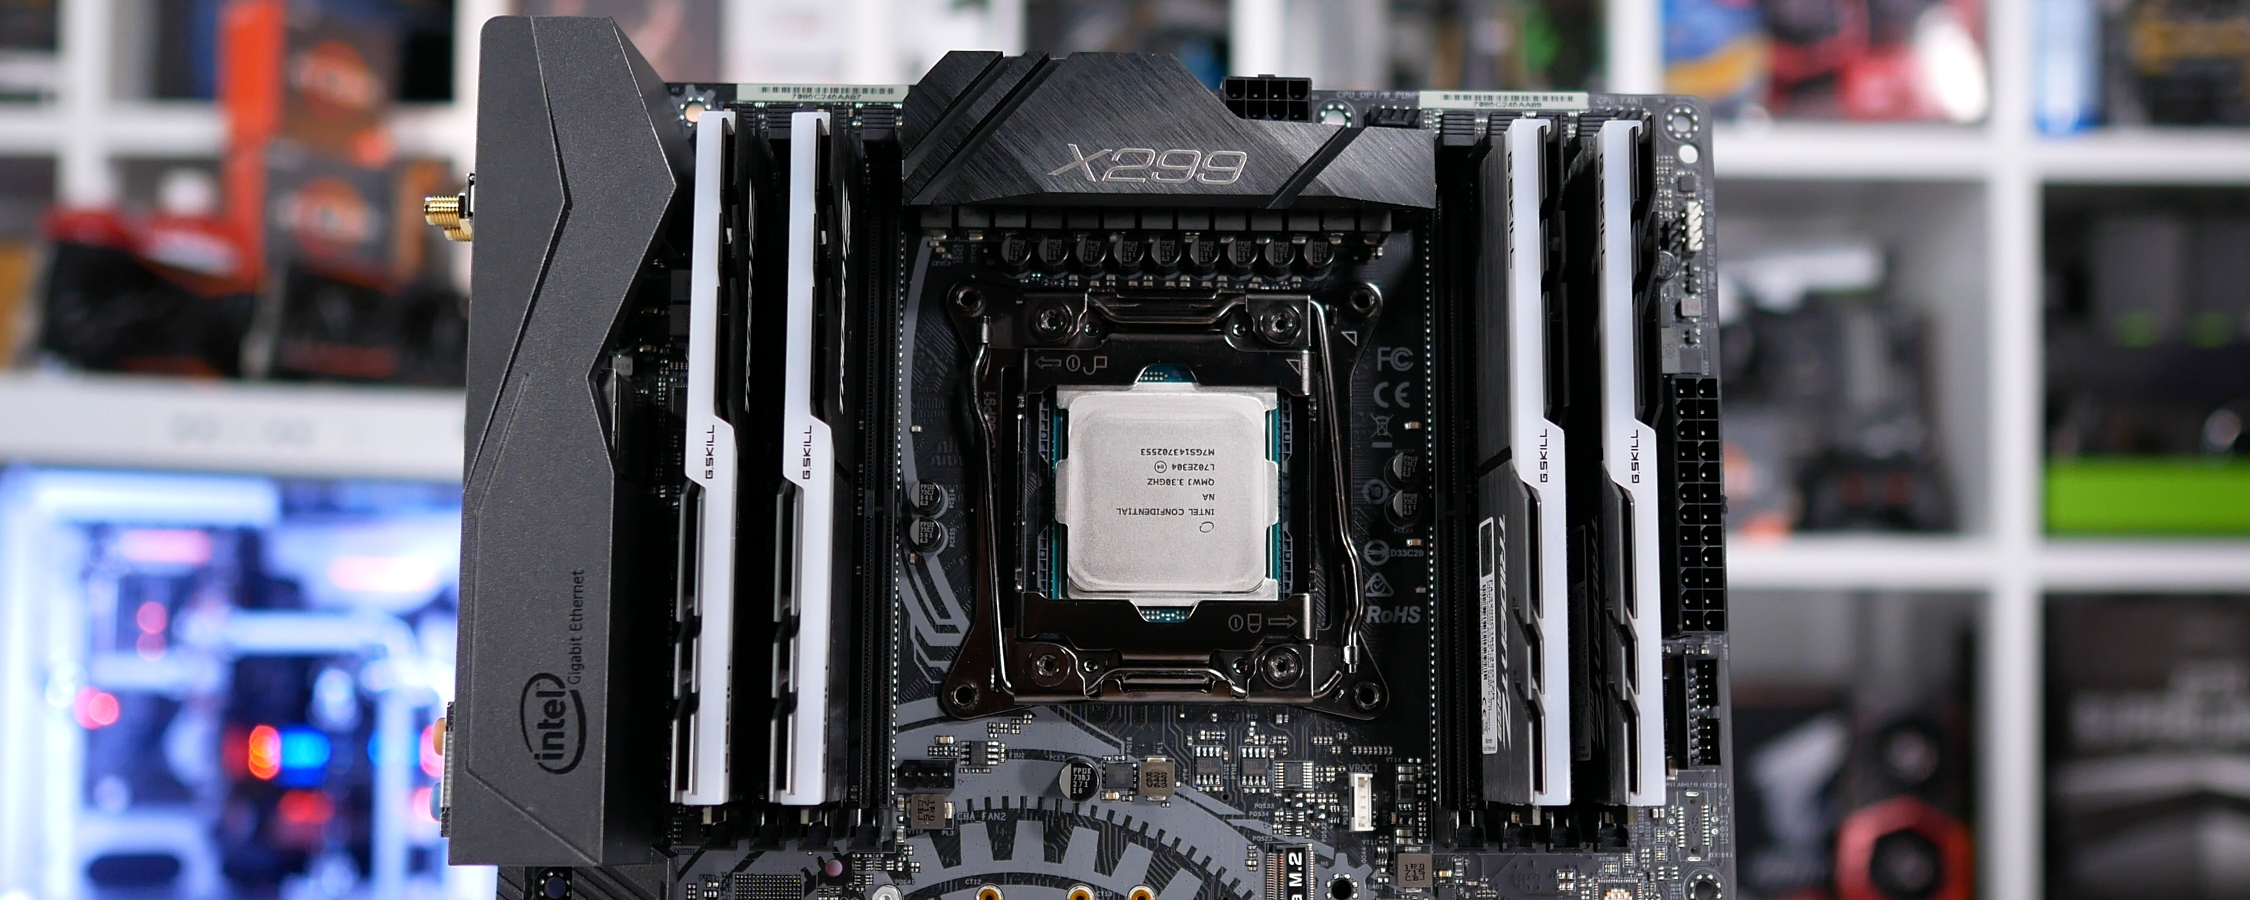 Intel Core i9-7900X, Core i7-7820X and i7-7800X Review 